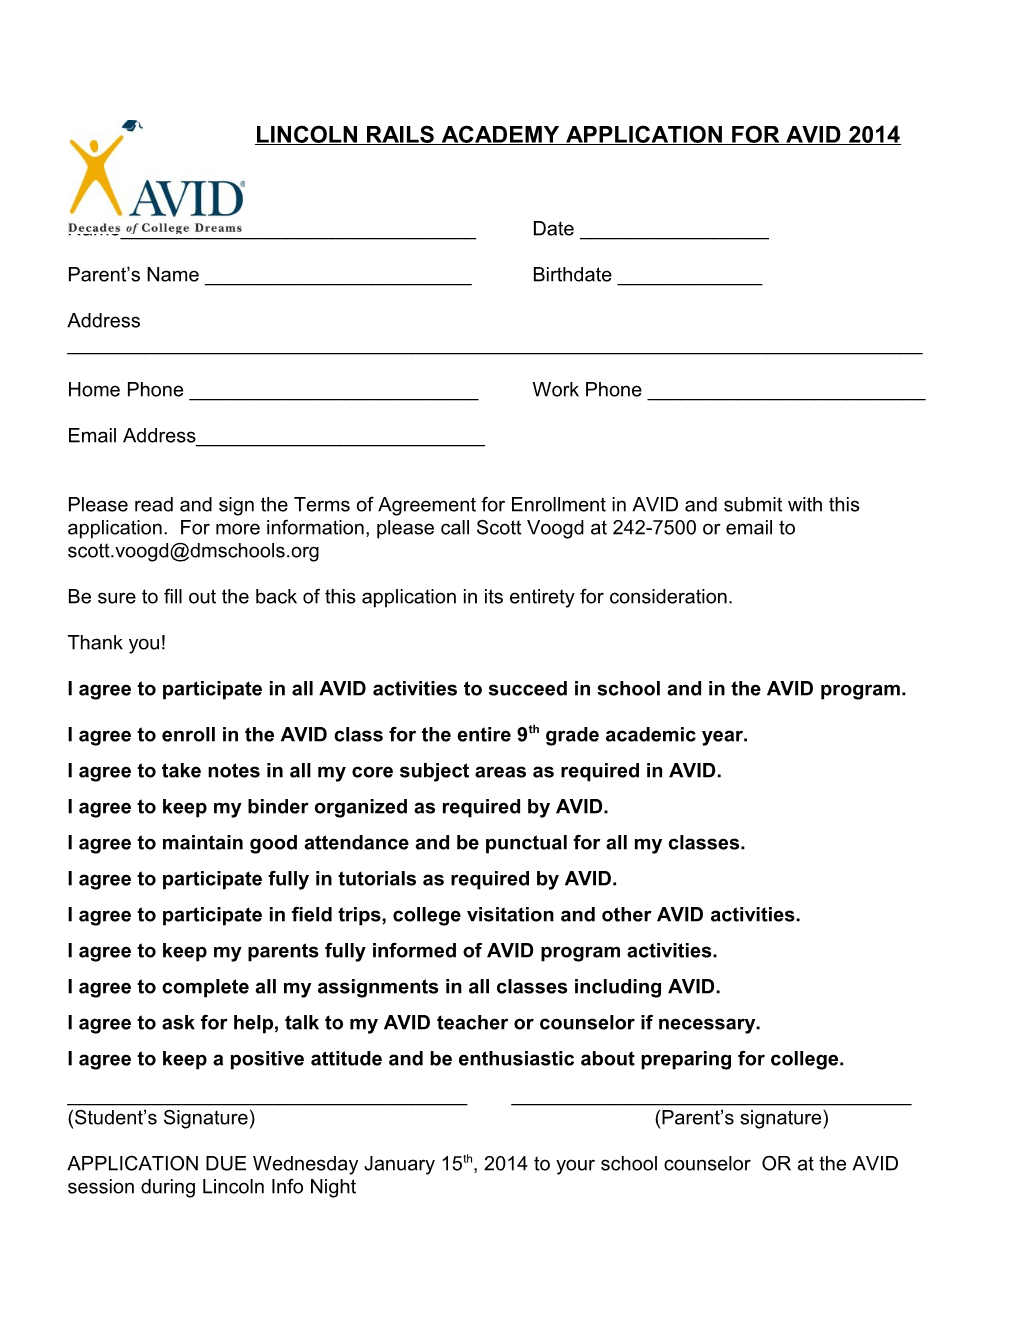 Application for Avid